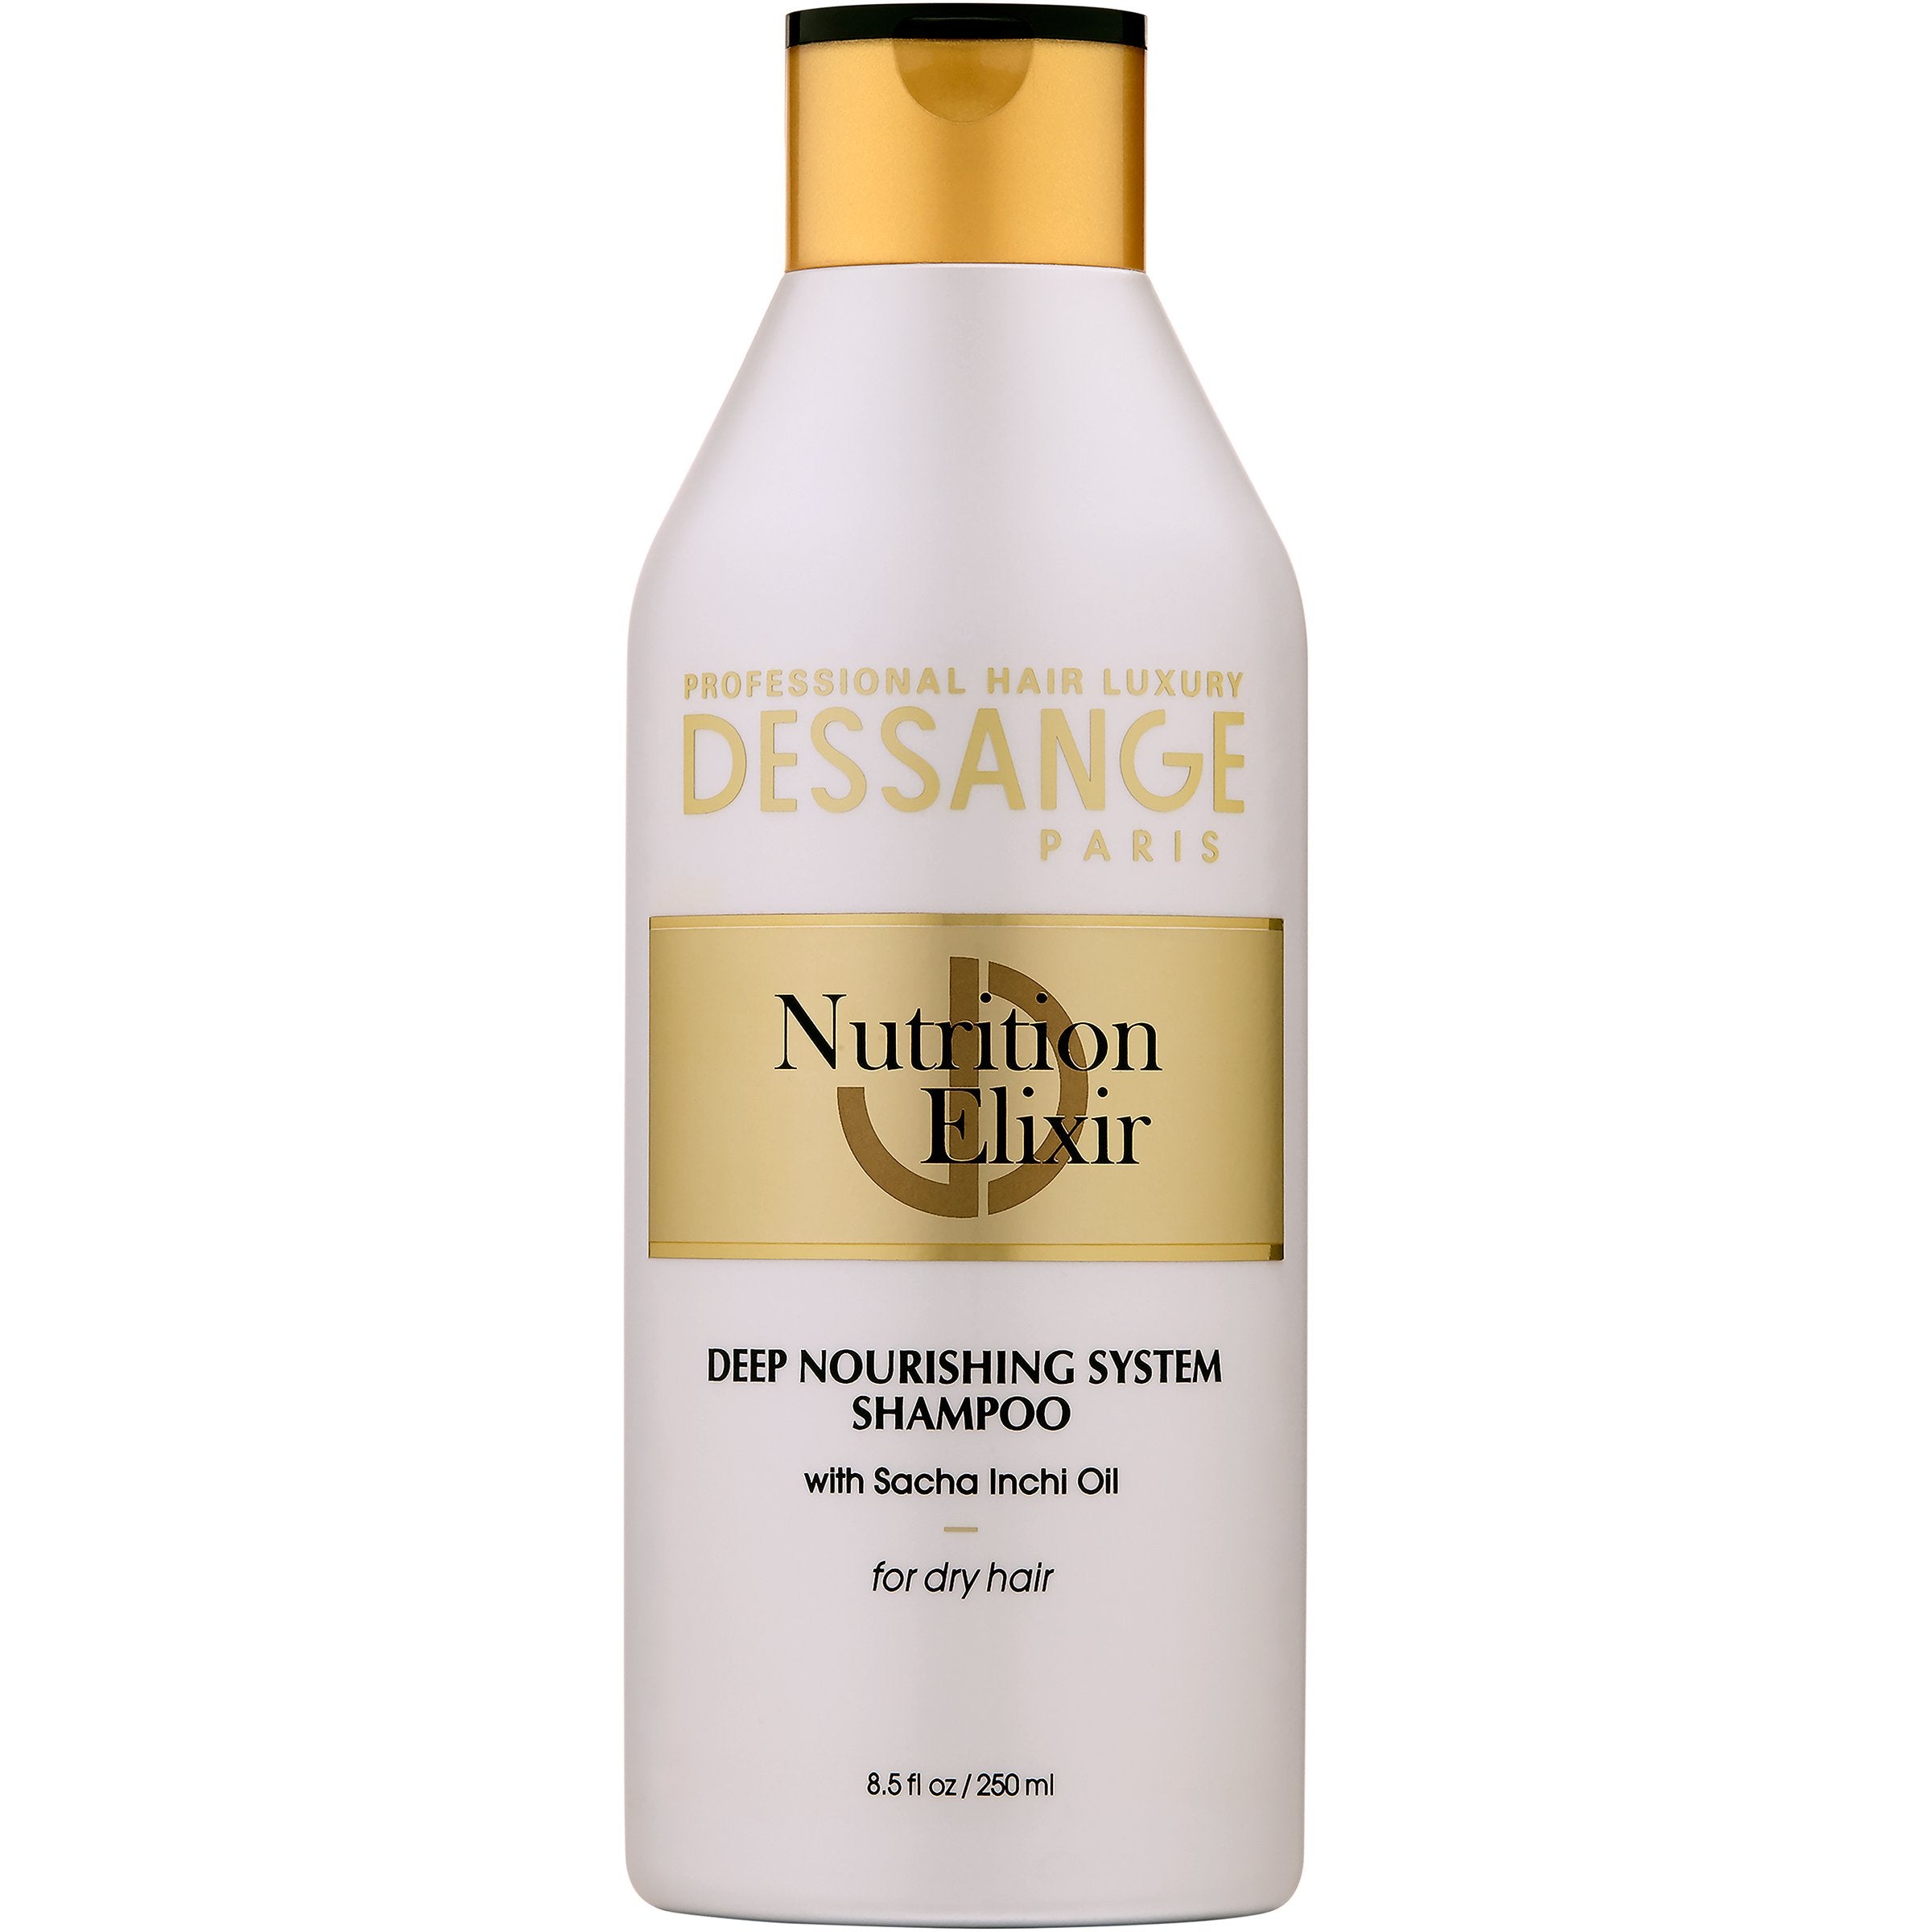 Dessange Nutrition Elixir Deep Nourishing System Shampoo, 8.5 Fluid Ounce